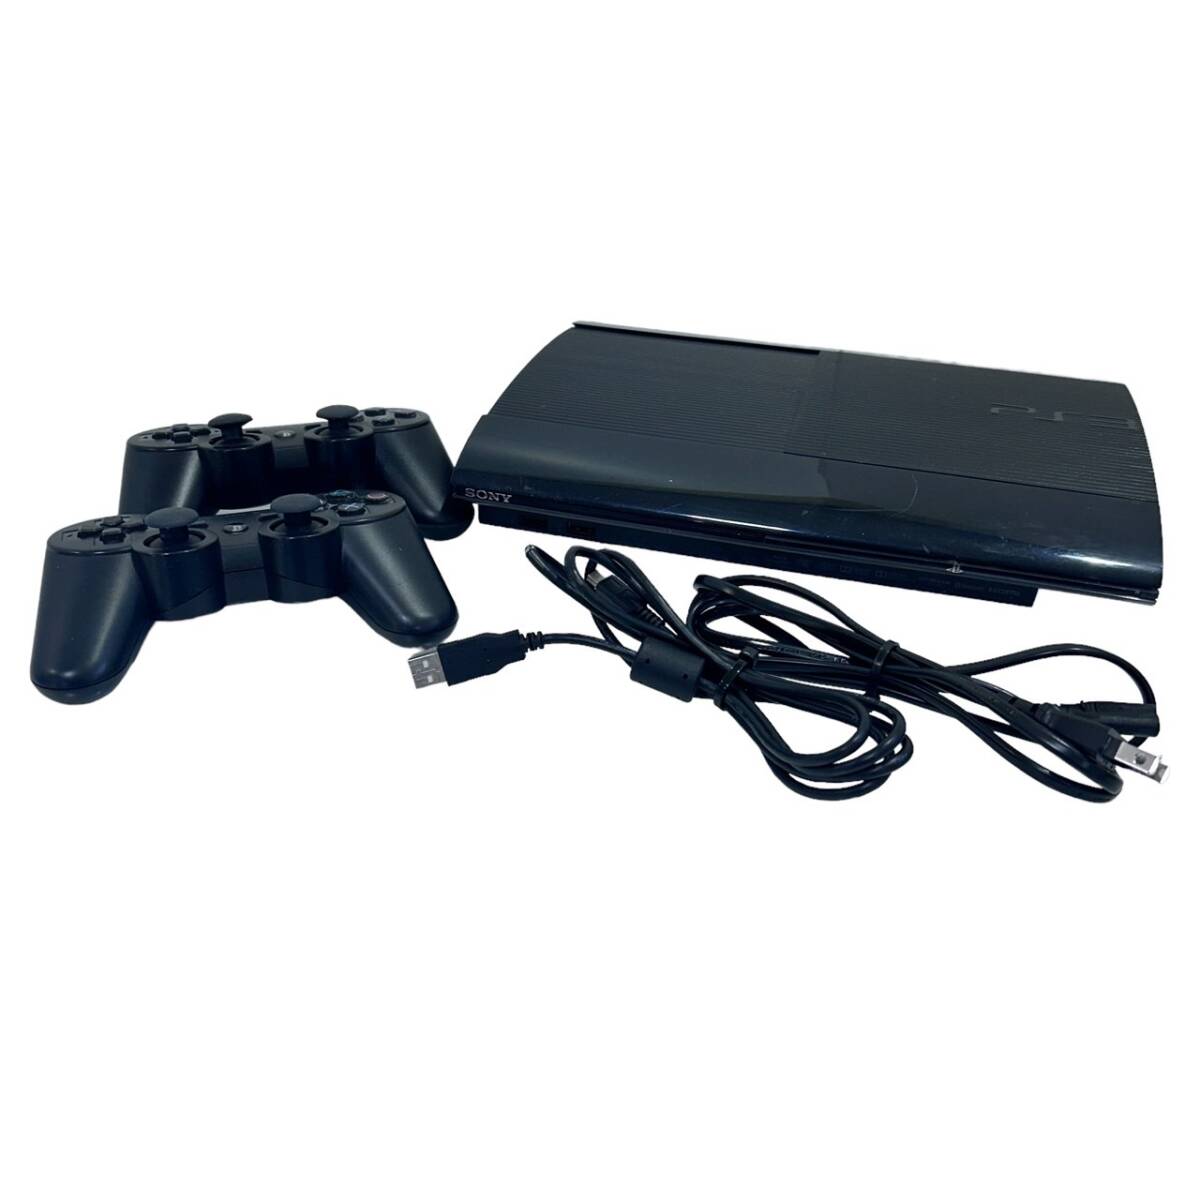  accessory have SONY/ Sony PlayStation3 PlayStation 3 body CECH-4300C 500GB